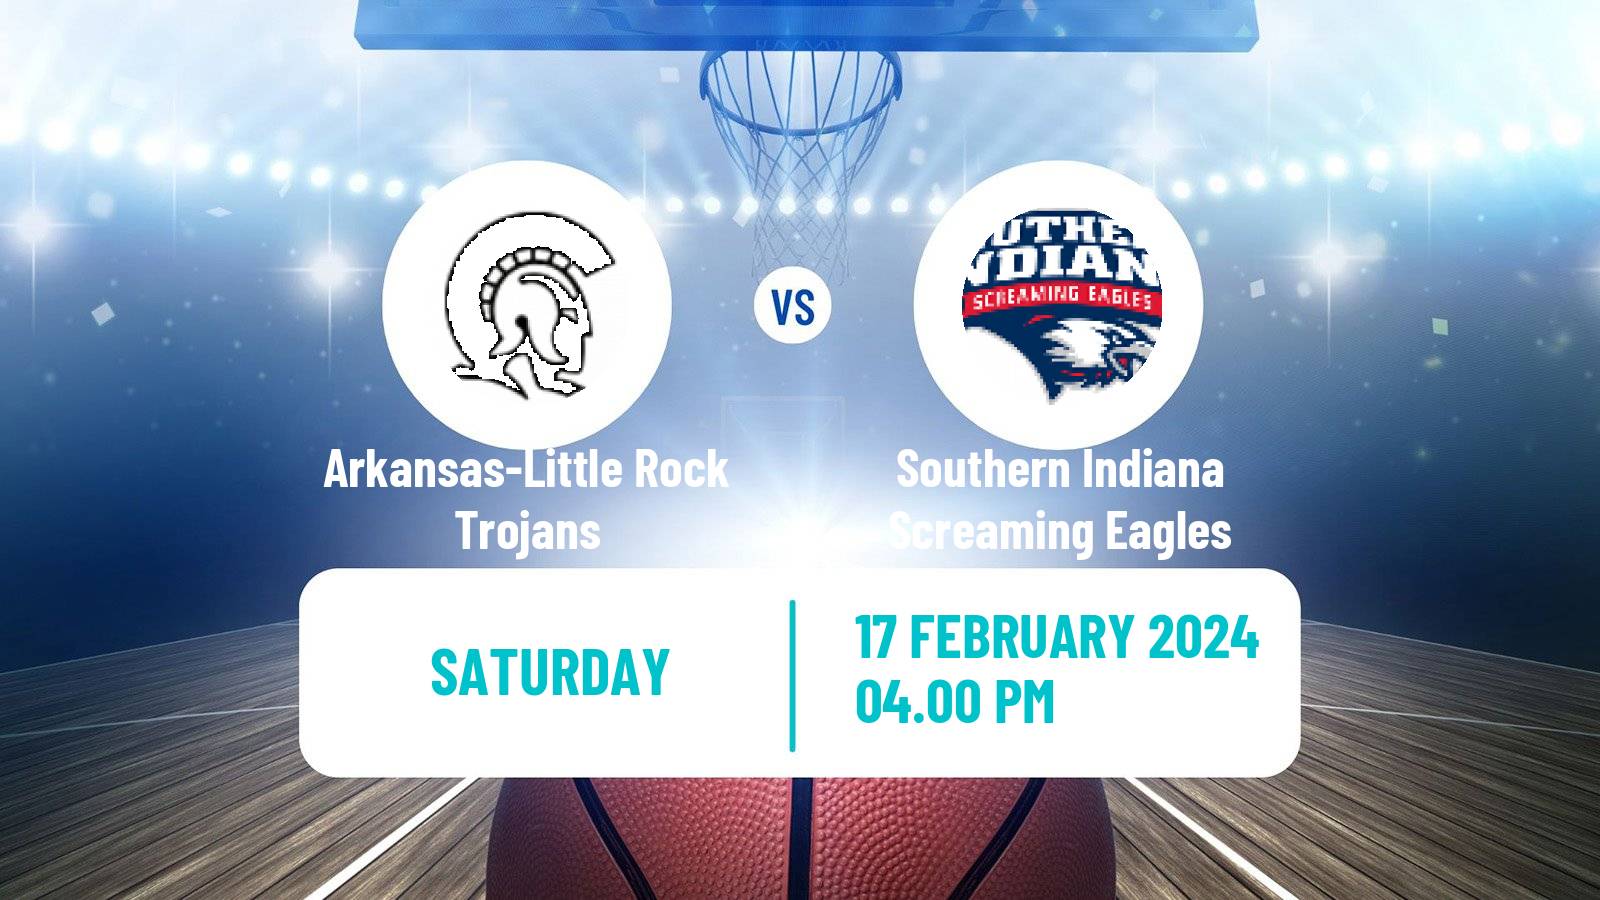 Basketball NCAA College Basketball Arkansas-Little Rock Trojans - Southern Indiana Screaming Eagles